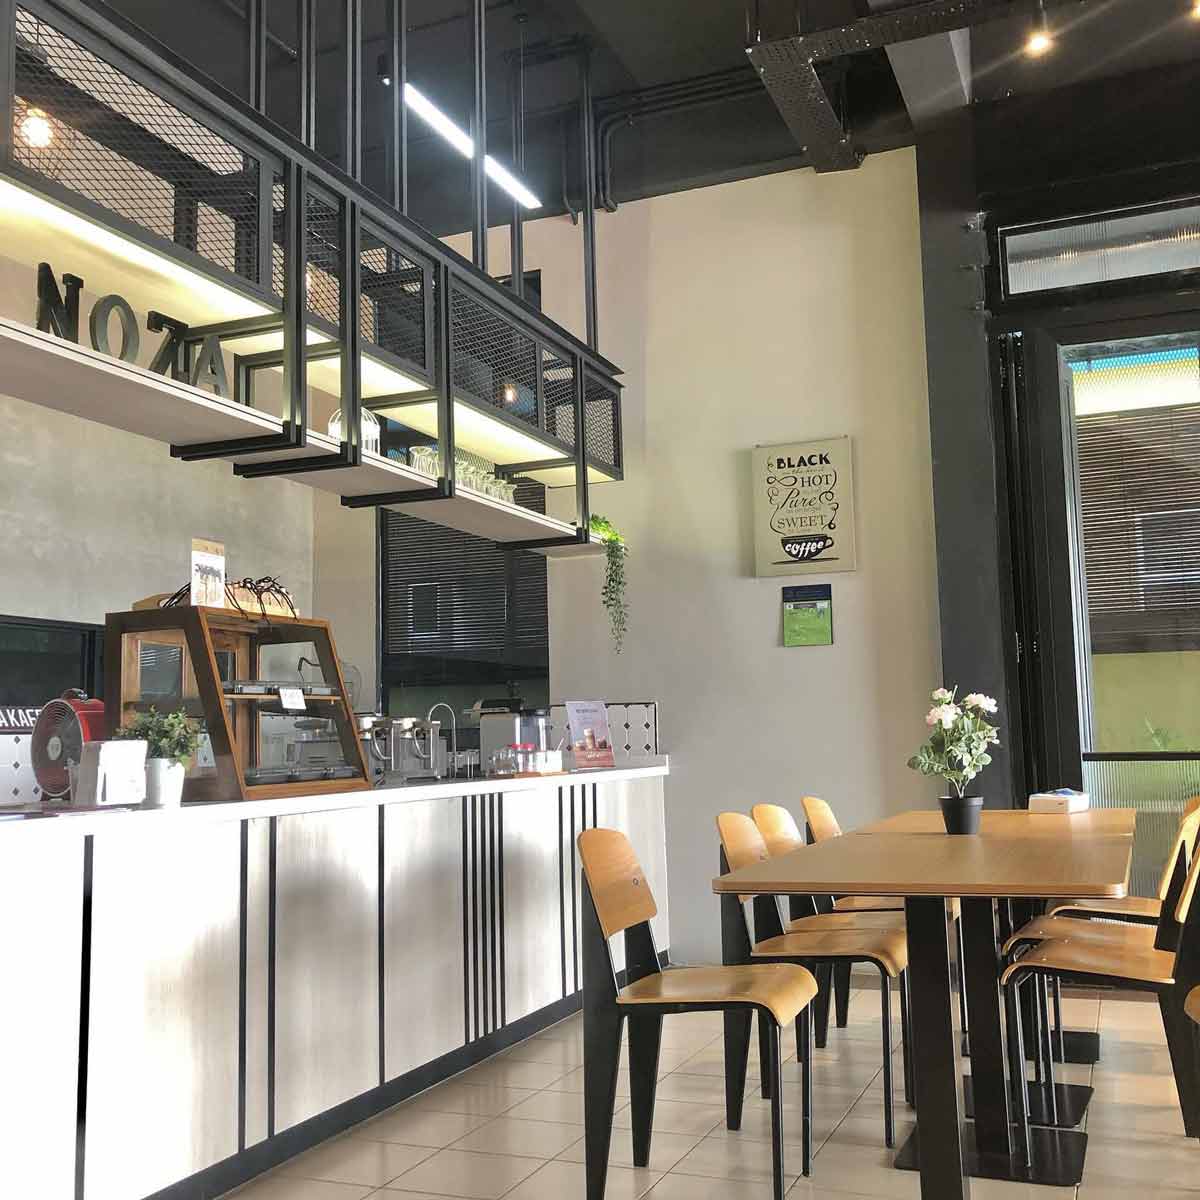 Noza Café Kuala Selangor - Inner View